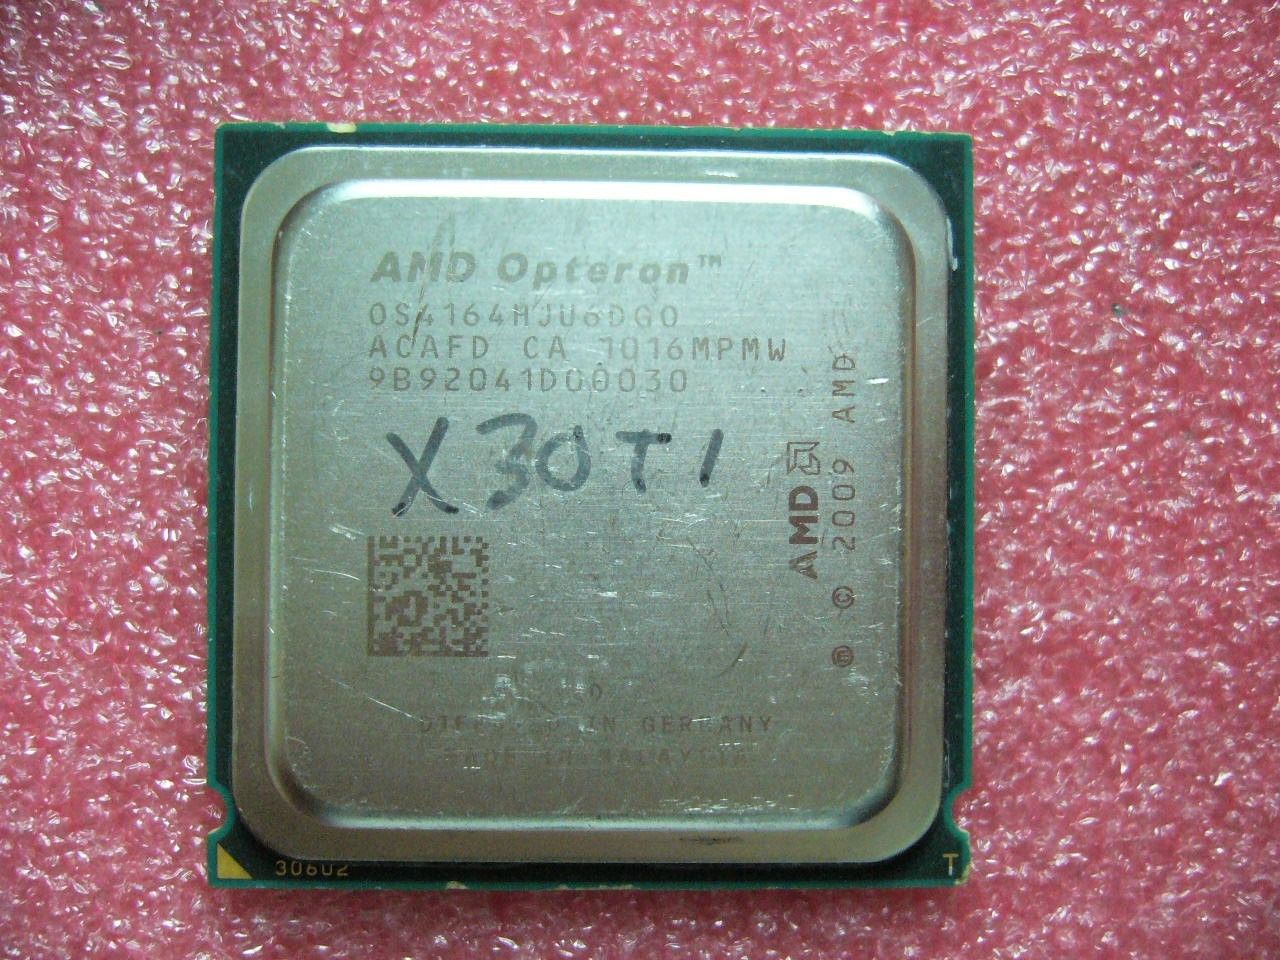 QTY 1x AMD Opteron 4164 EE 1.8 GHz Six Core (OS4164HJU6DGO) CPU Socket C32